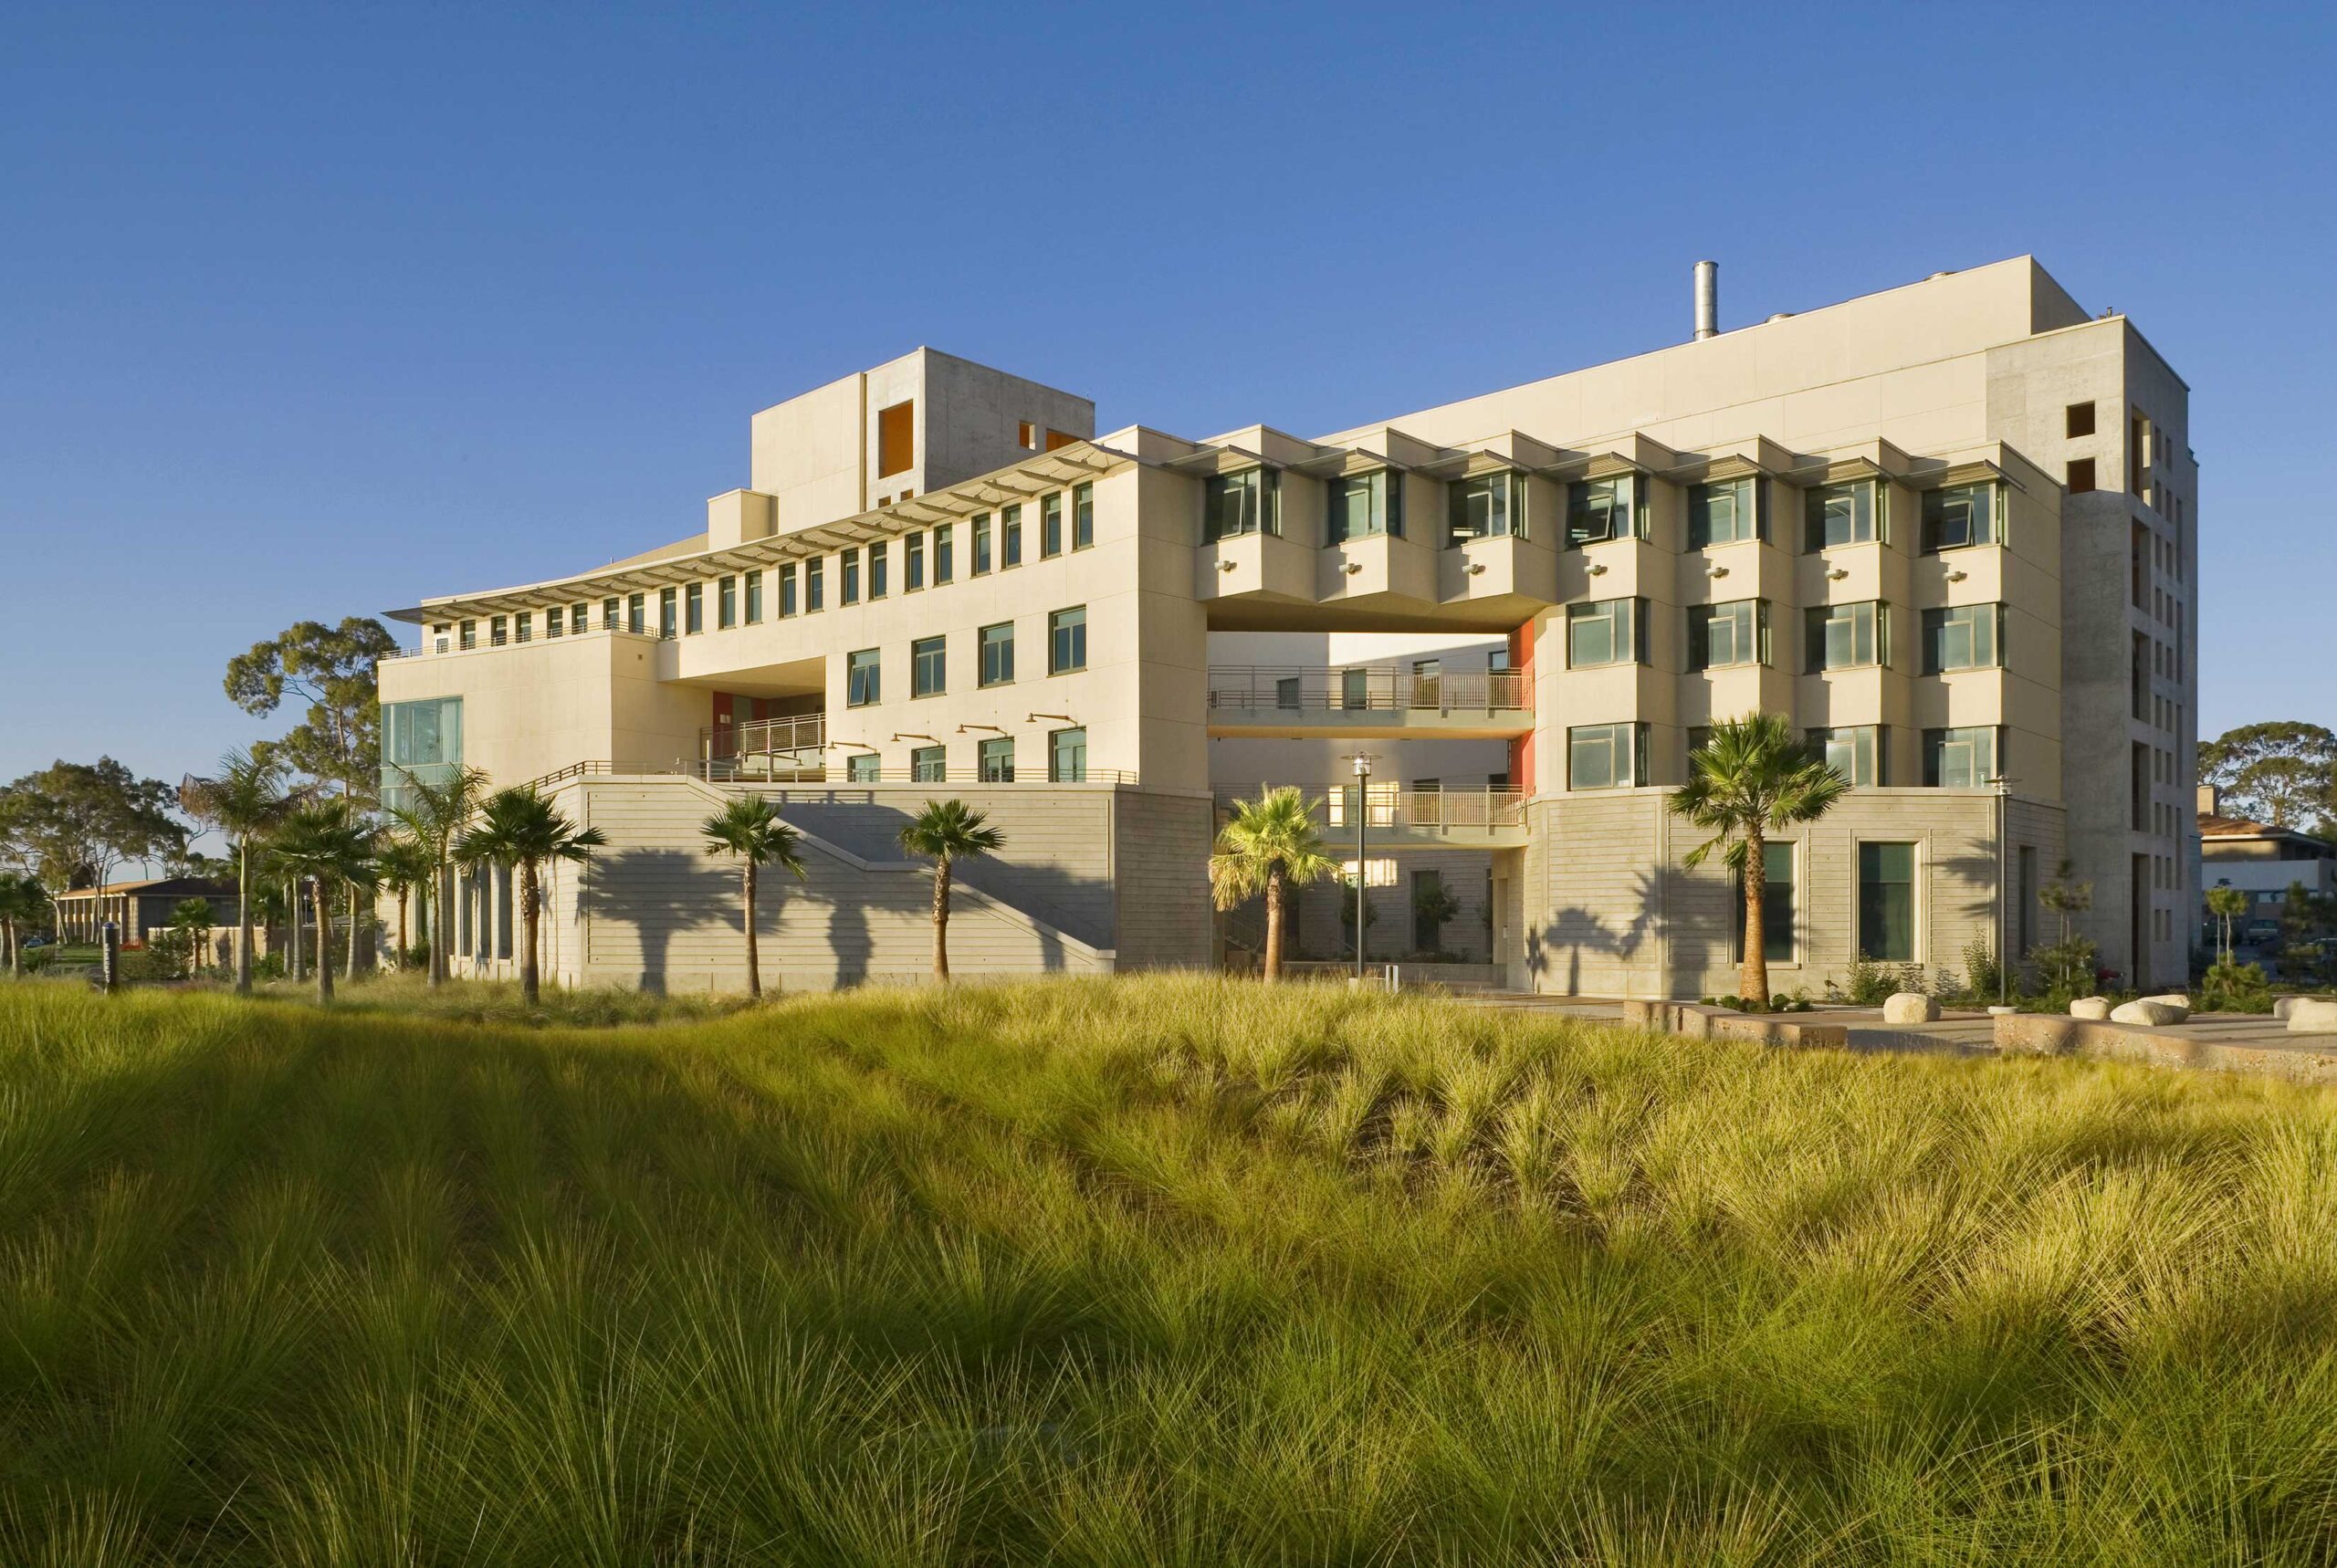 The Marine Science Institute building at UC Santa Barbara.